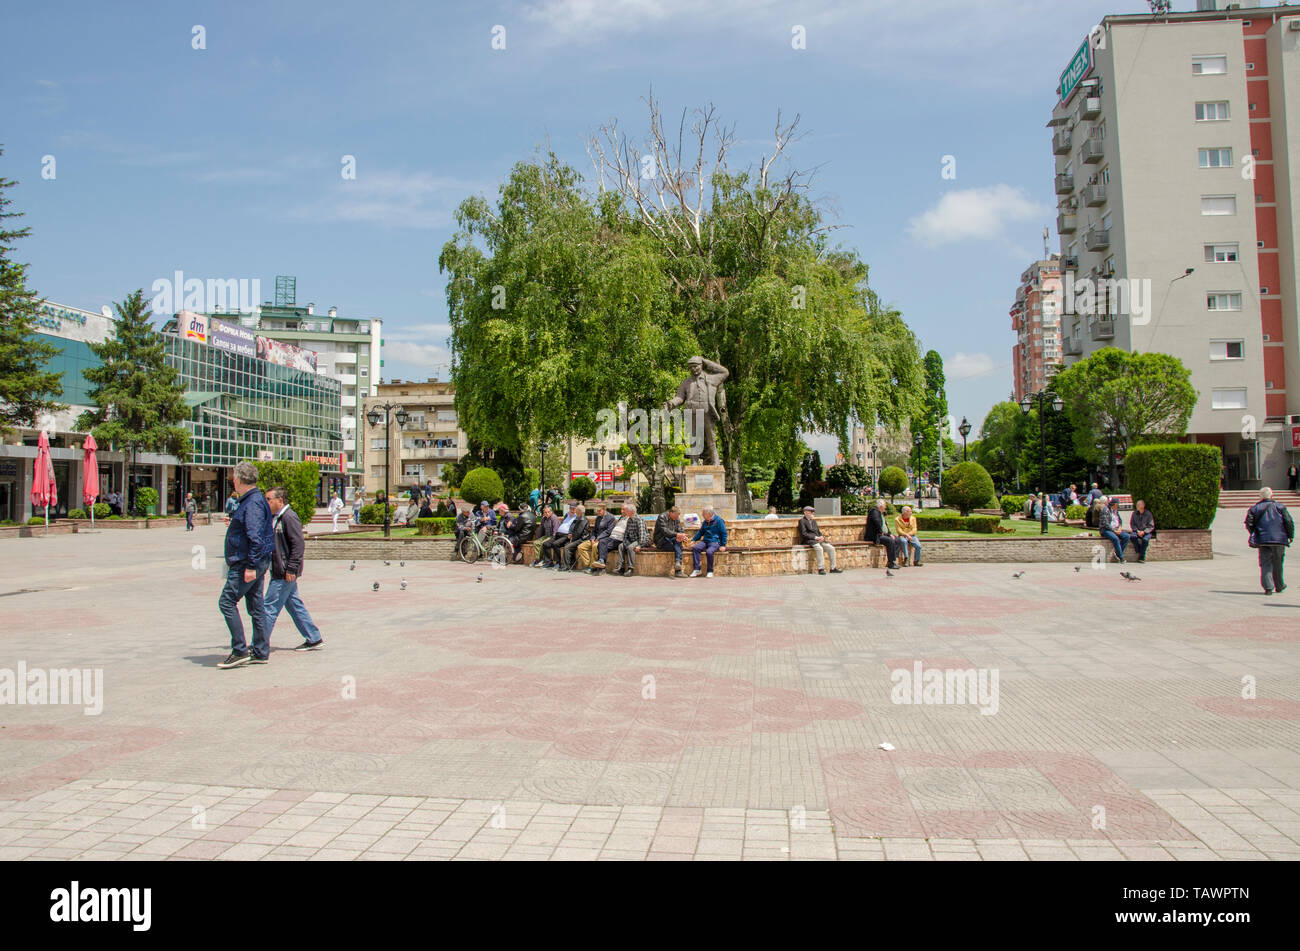 Kumanovo, Macedonia - city center - Batko Gjorgia monument Stock Photo